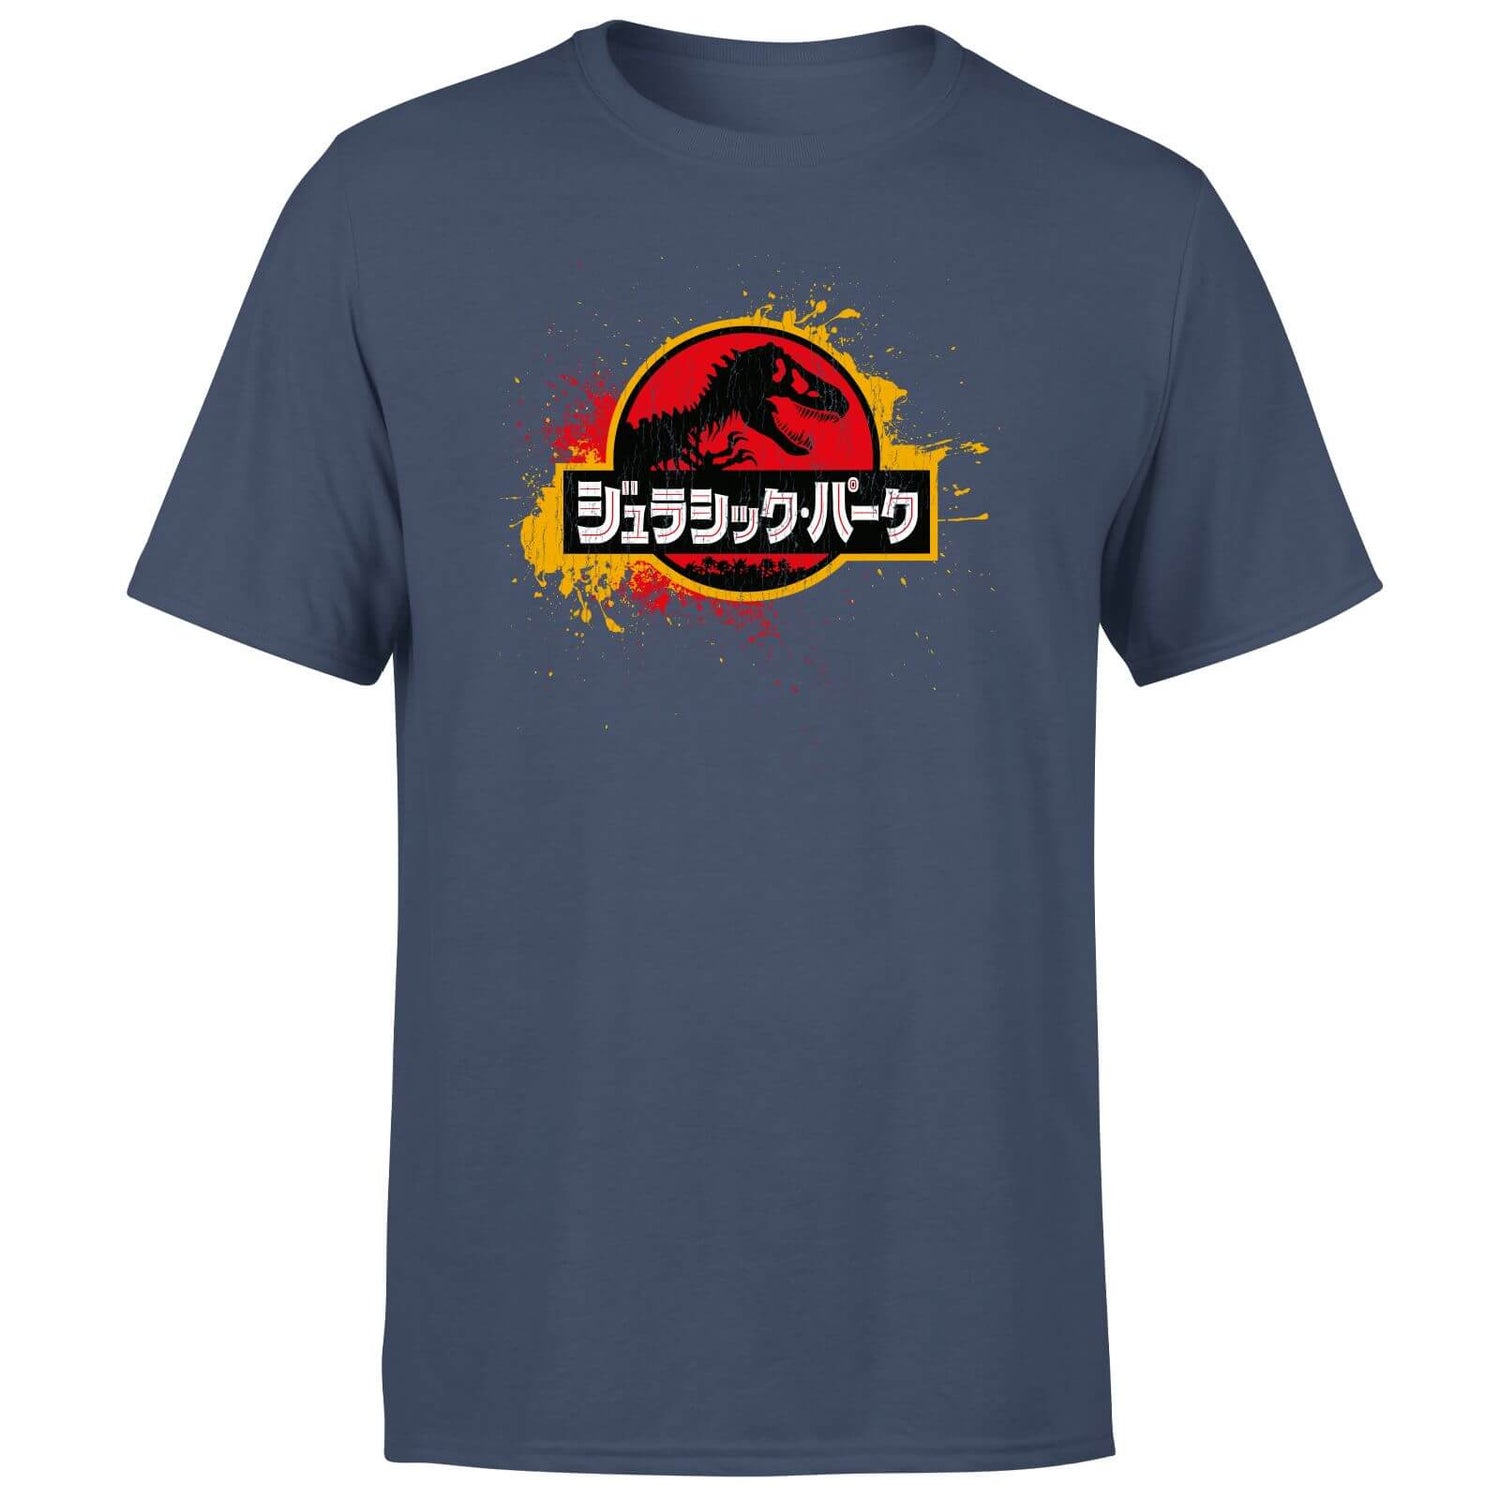 Jurassic Park Men's T-Shirt - Navy